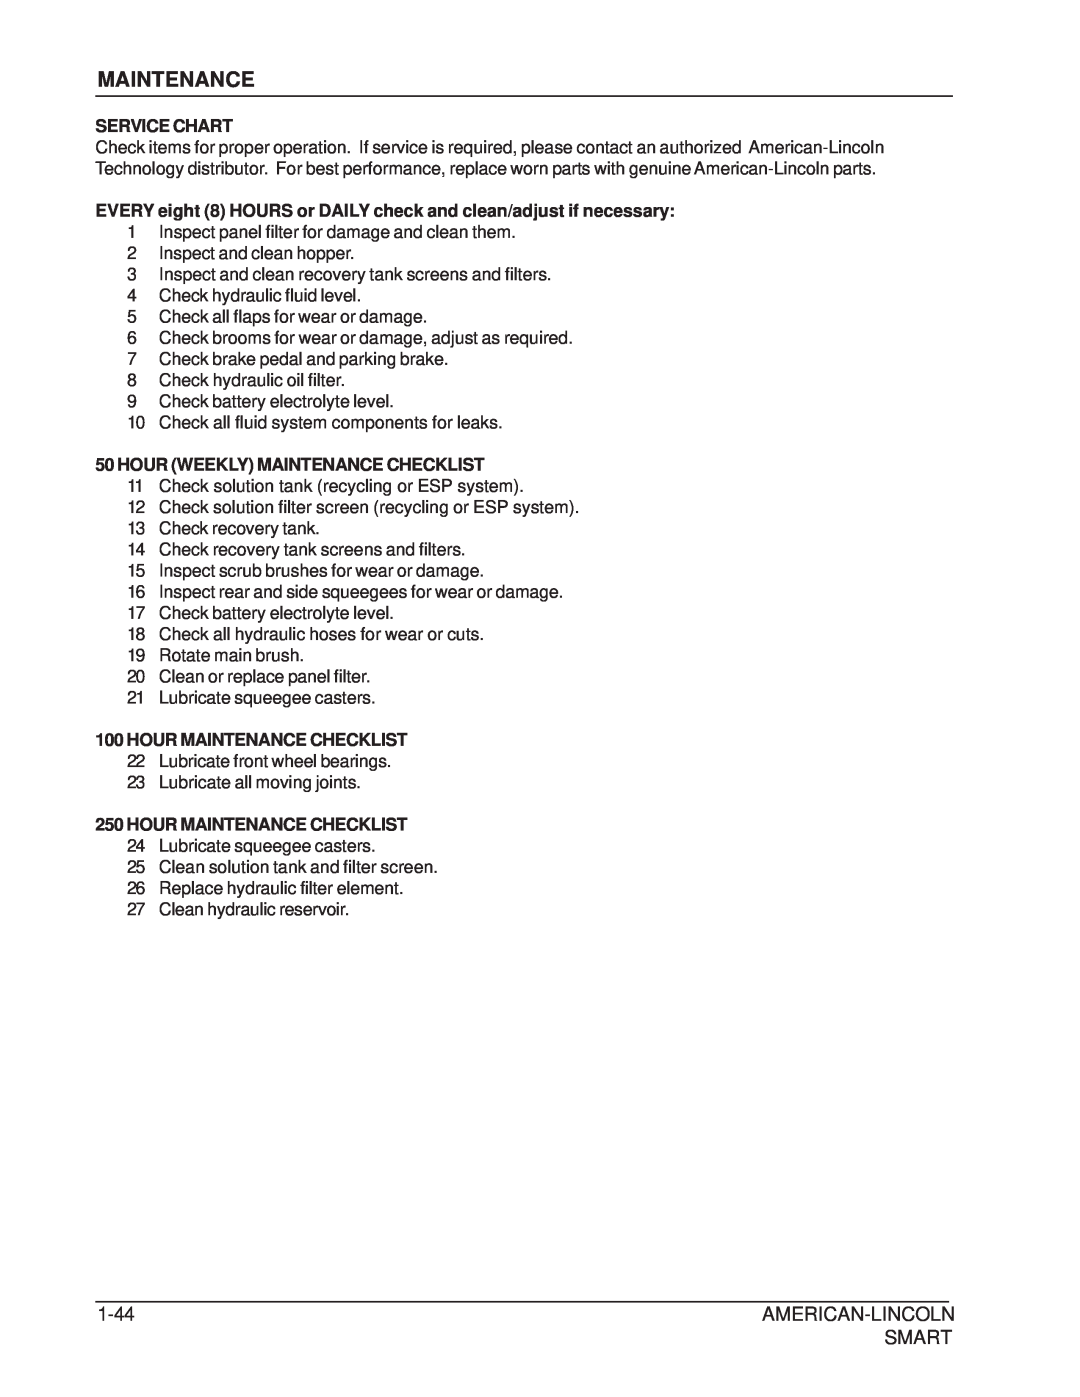 Nilfisk-ALTO 692003 manual 1-44, American-Lincoln, Smart, Service Chart, Hour Weekly Maintenance Checklist 